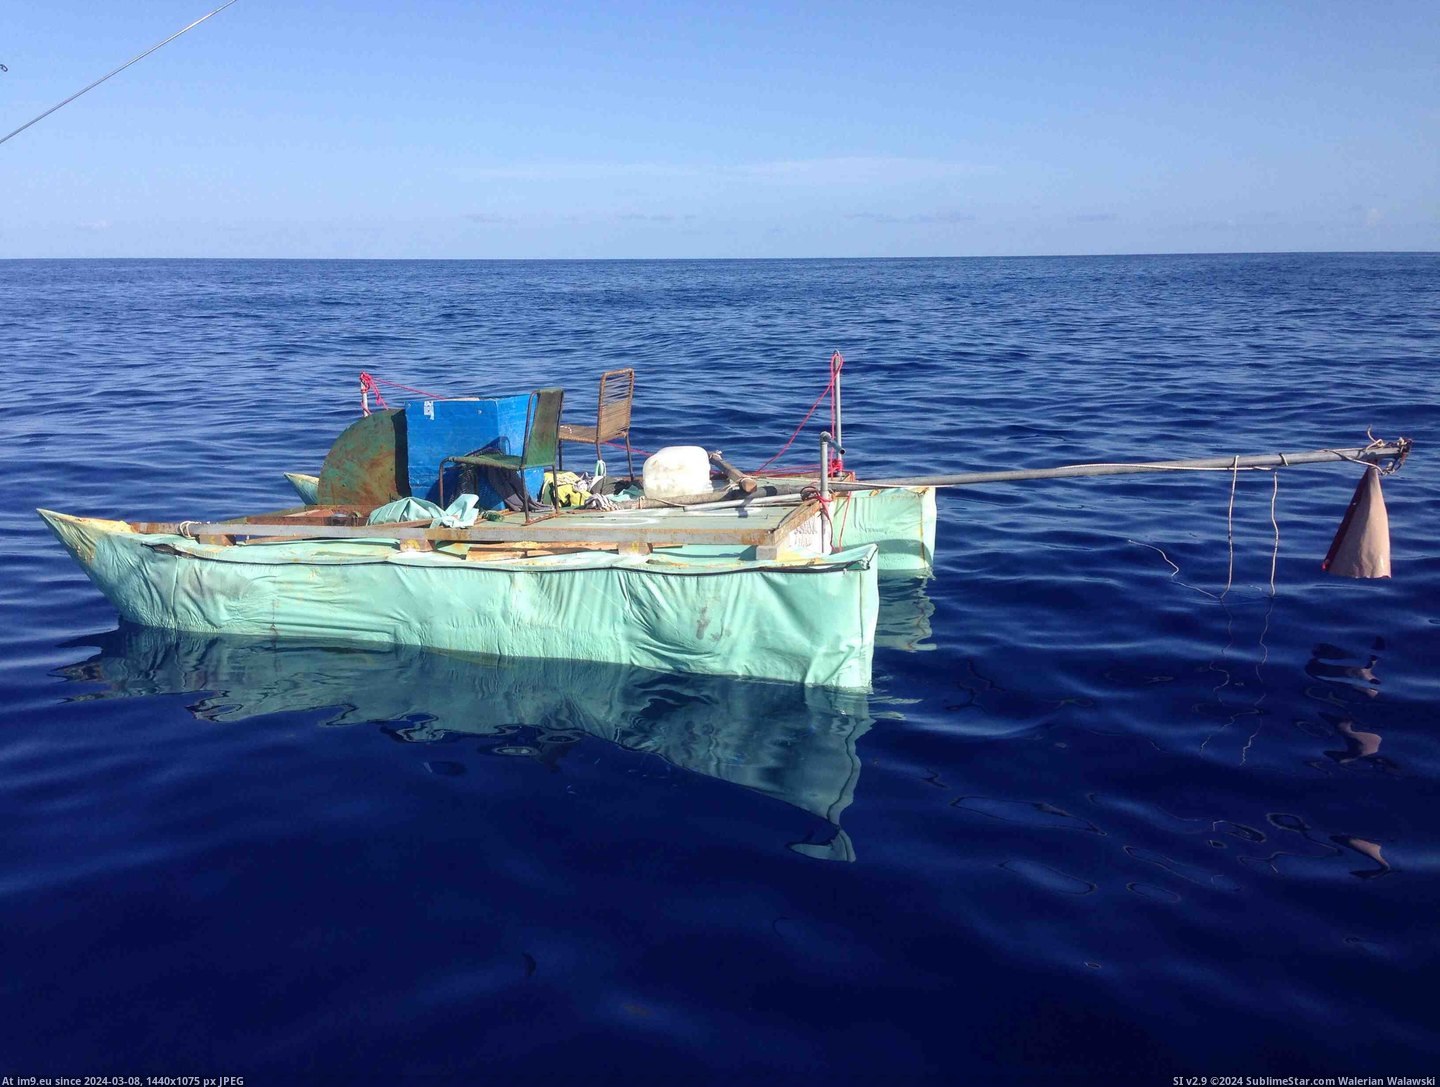 #Sea #Abandoned #Cuban #Fishing #Raft [Pics] While fishing, we found an abandoned Cuban raft while at sea. Pic. (Изображение из альбом My r/PICS favs))